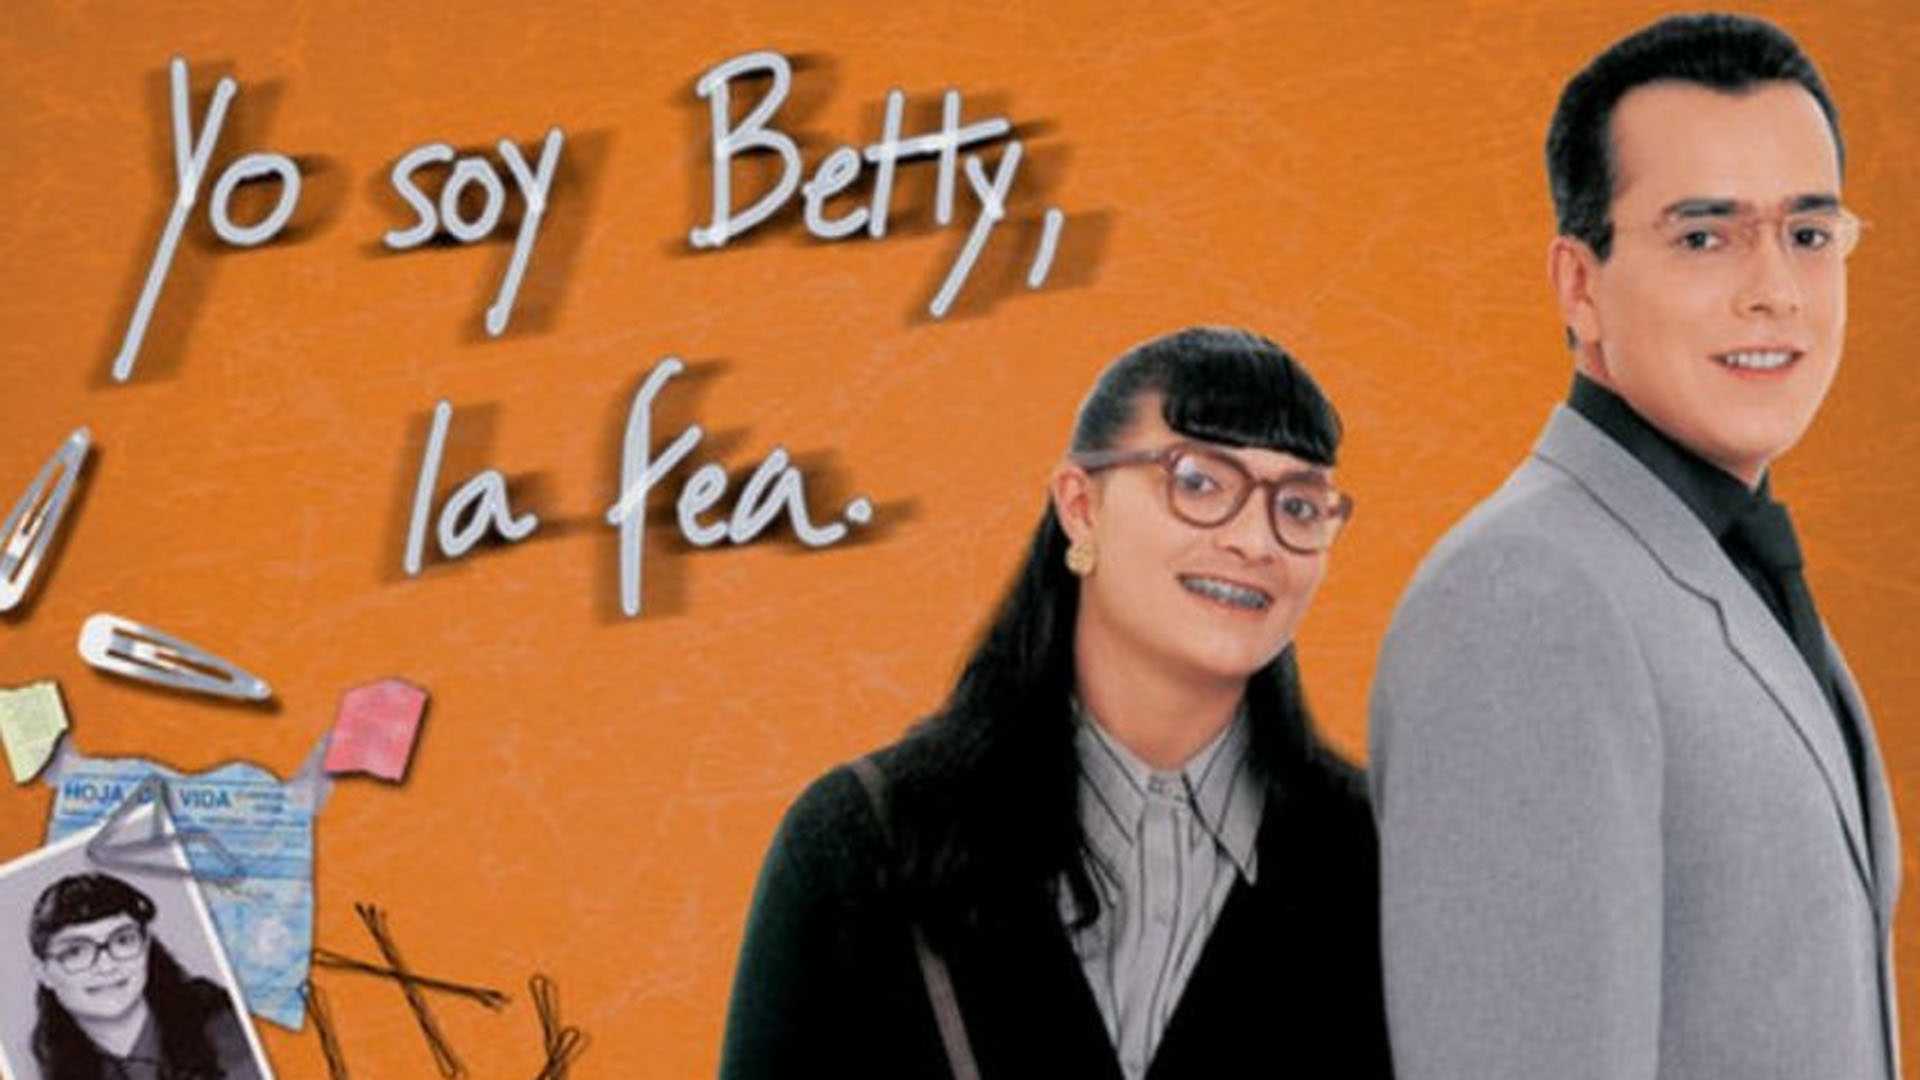 betty-fea-banner-1